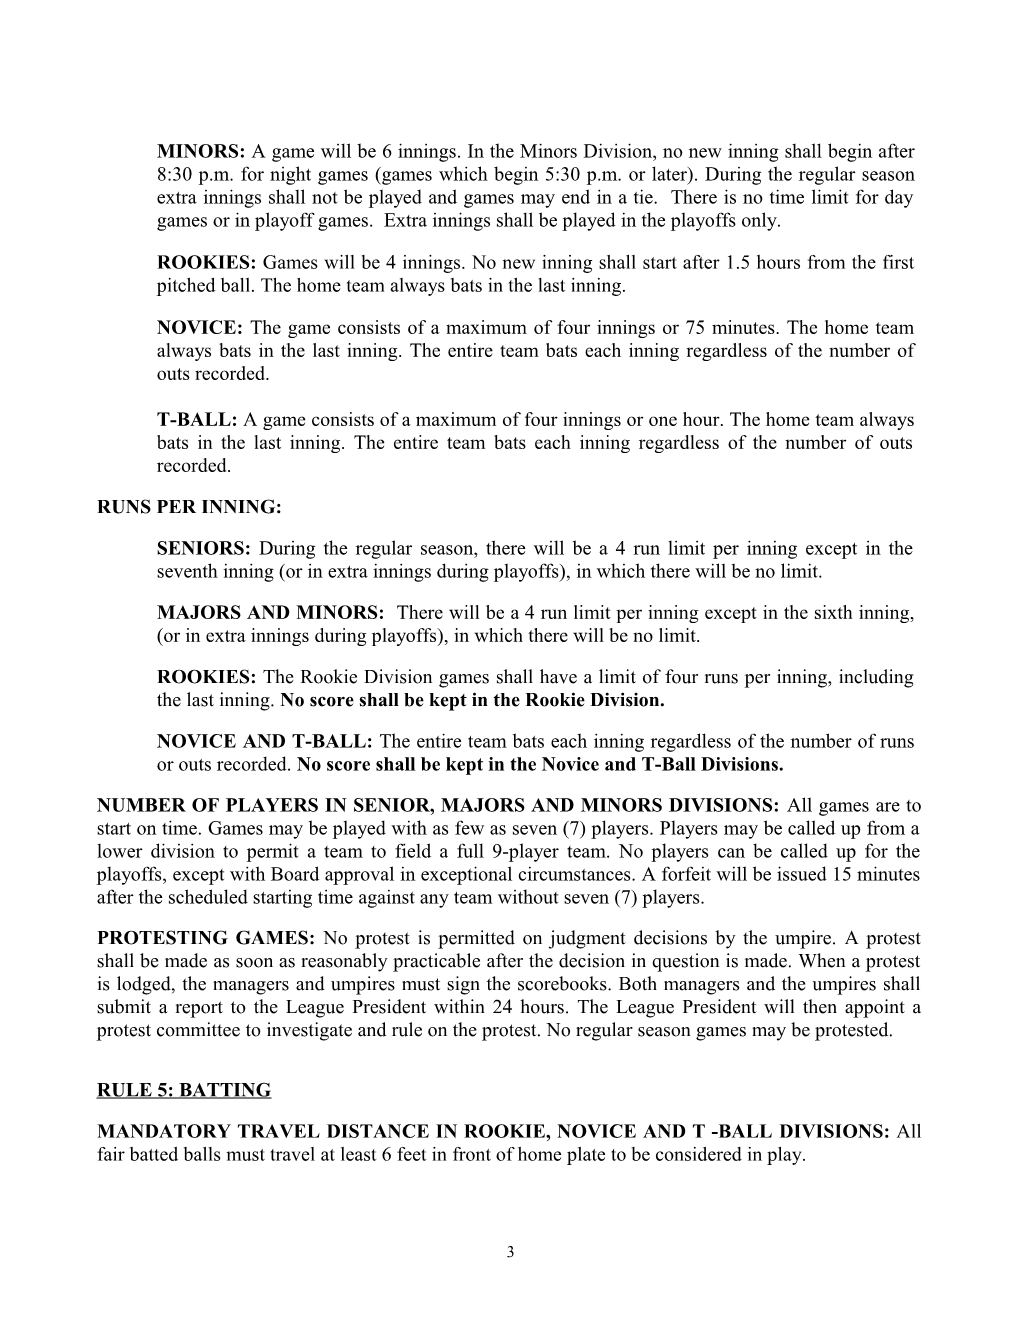 GLOUCESTER TOWNSHIP BASEBALL RULES (Revised 4/12)